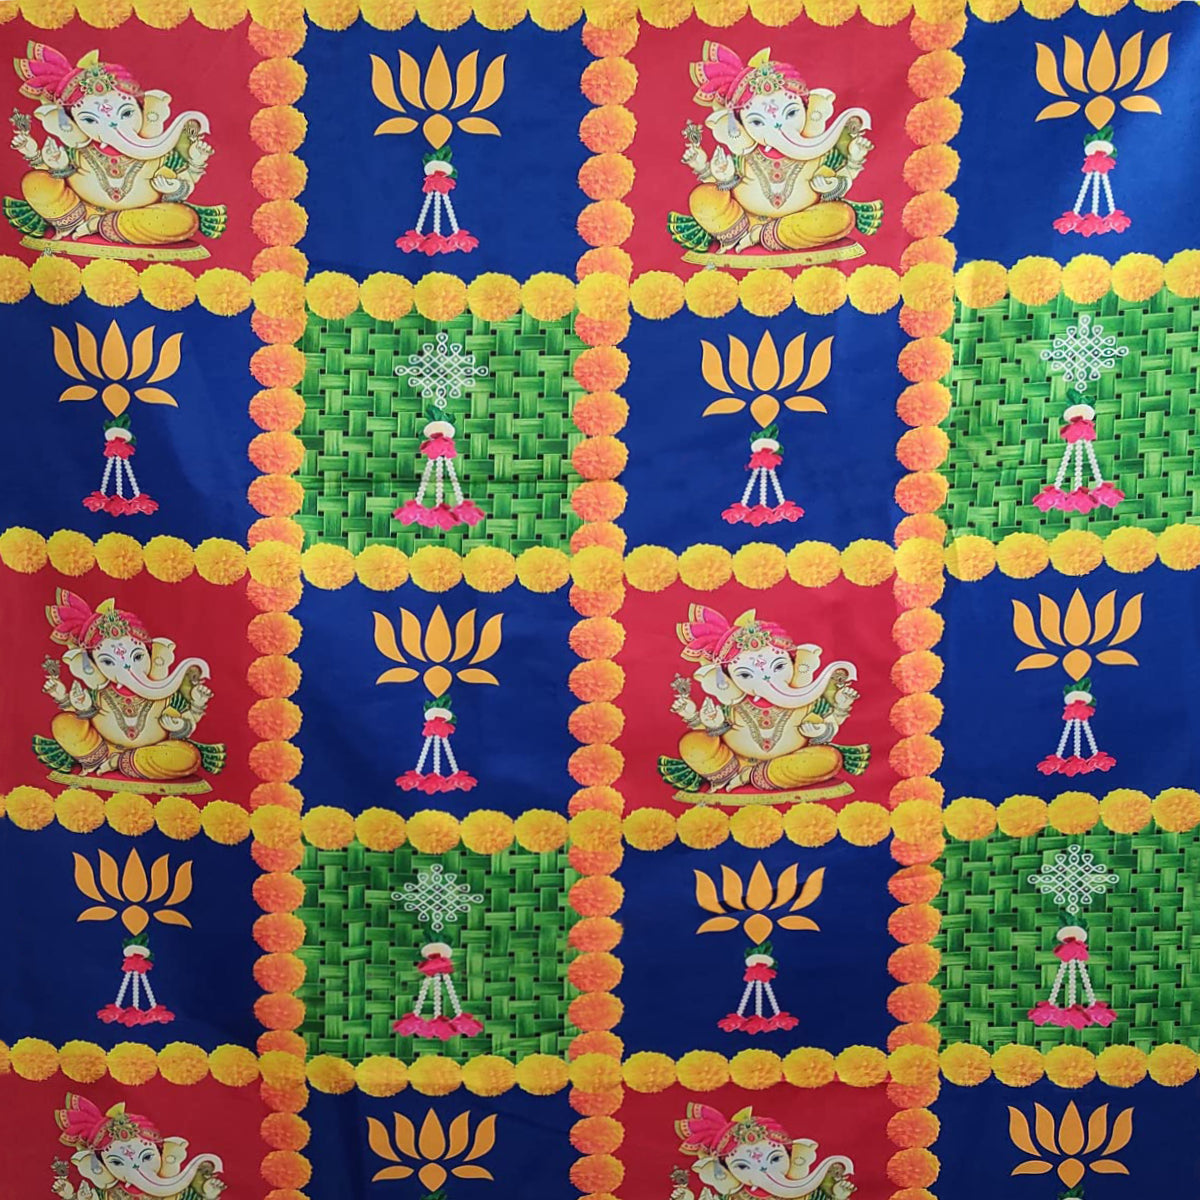 Multicolor Backdrop Clothes Print Ganesh Flower Design